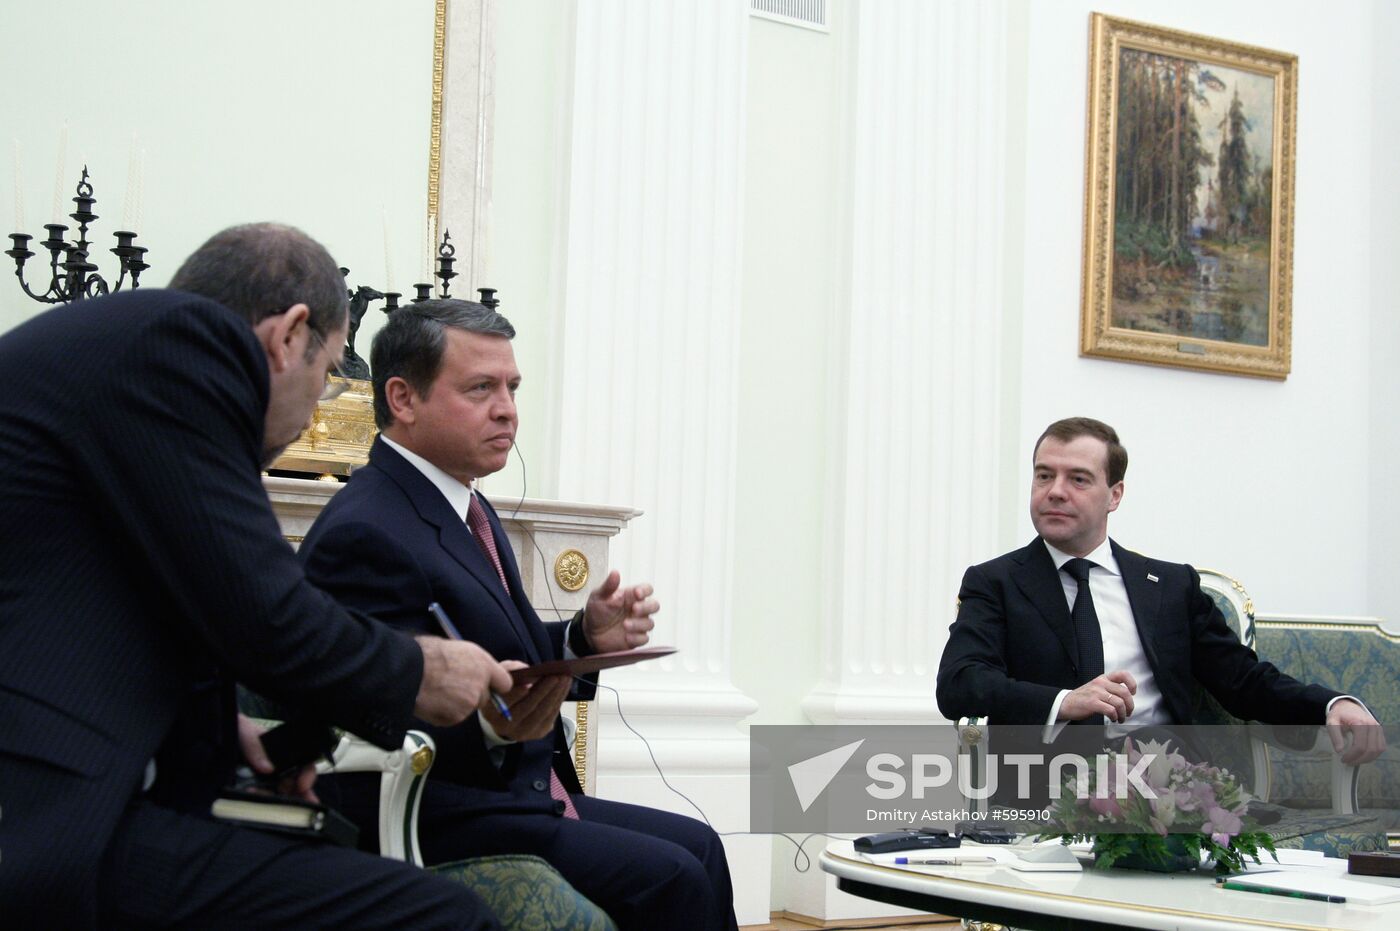 Russian President meets with King of Jordan in Kremlin